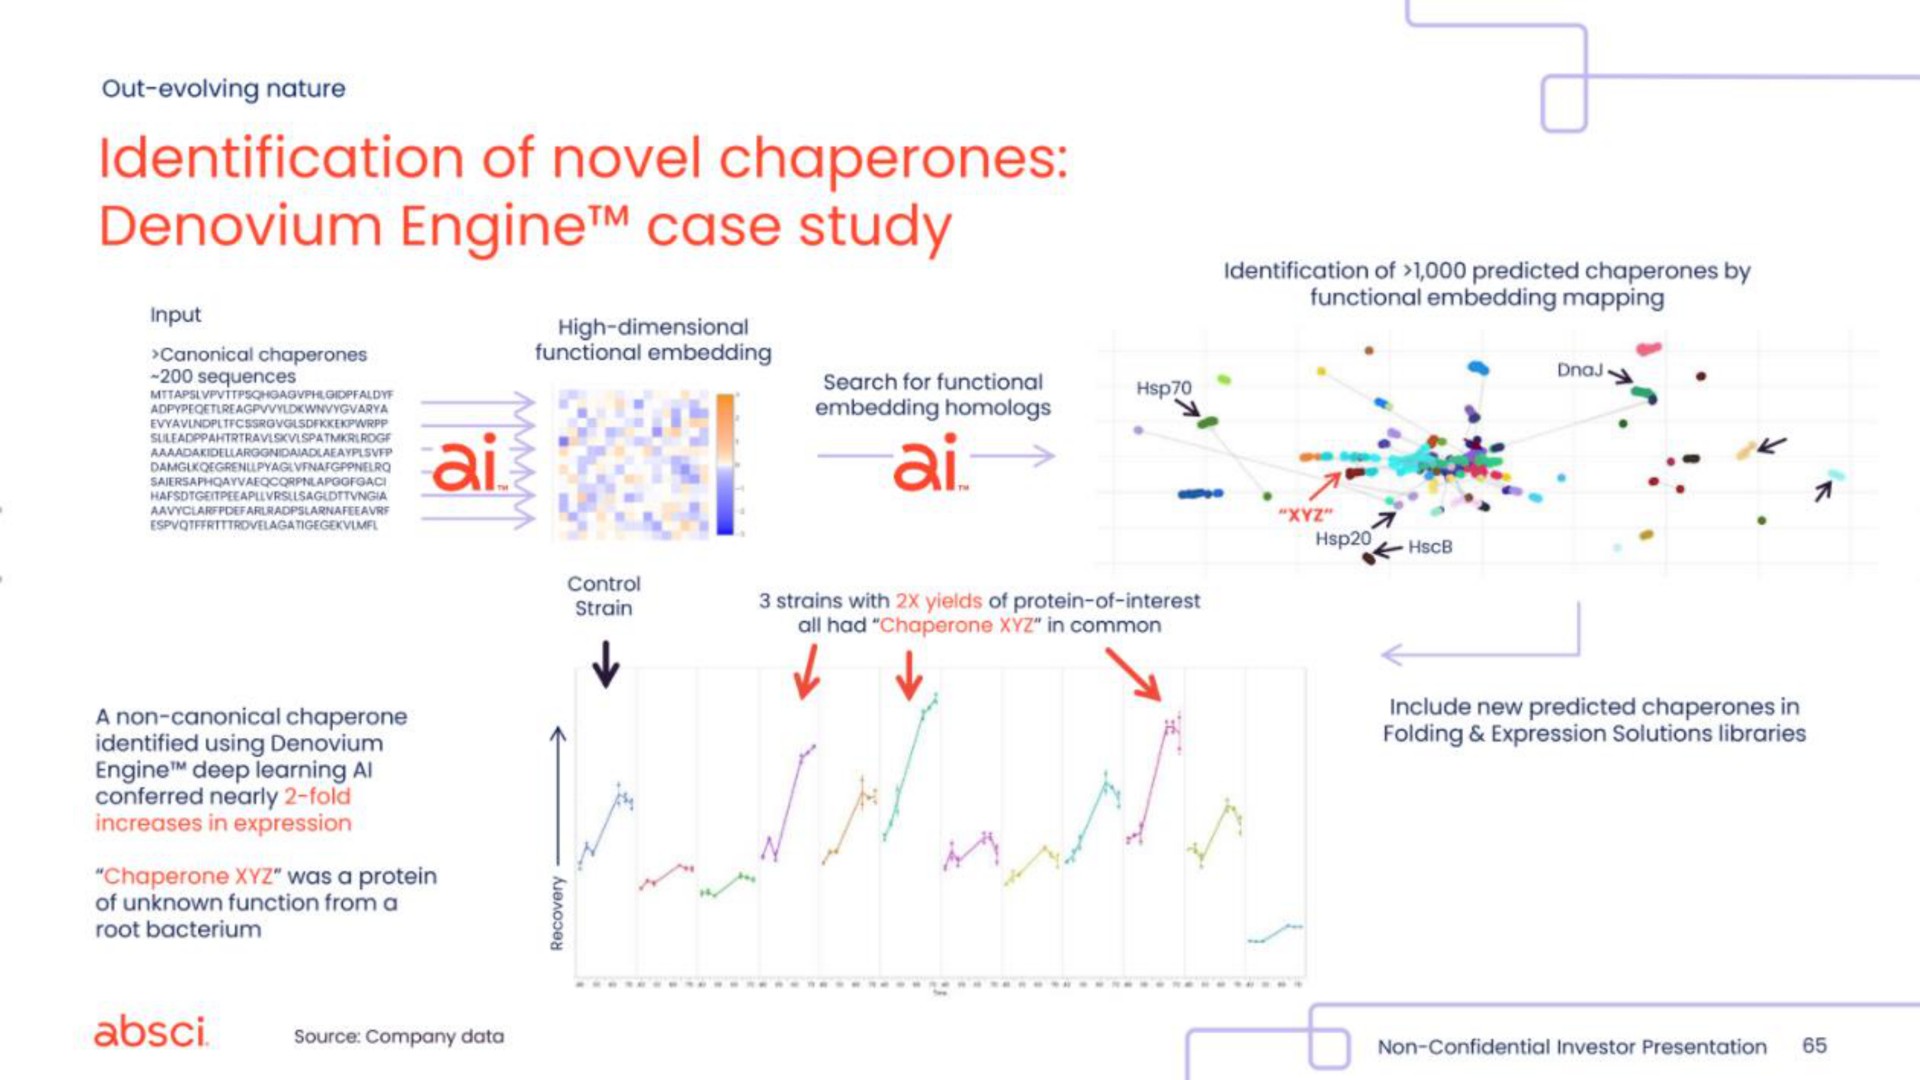 identification of novel chaperones engine case study | Absci